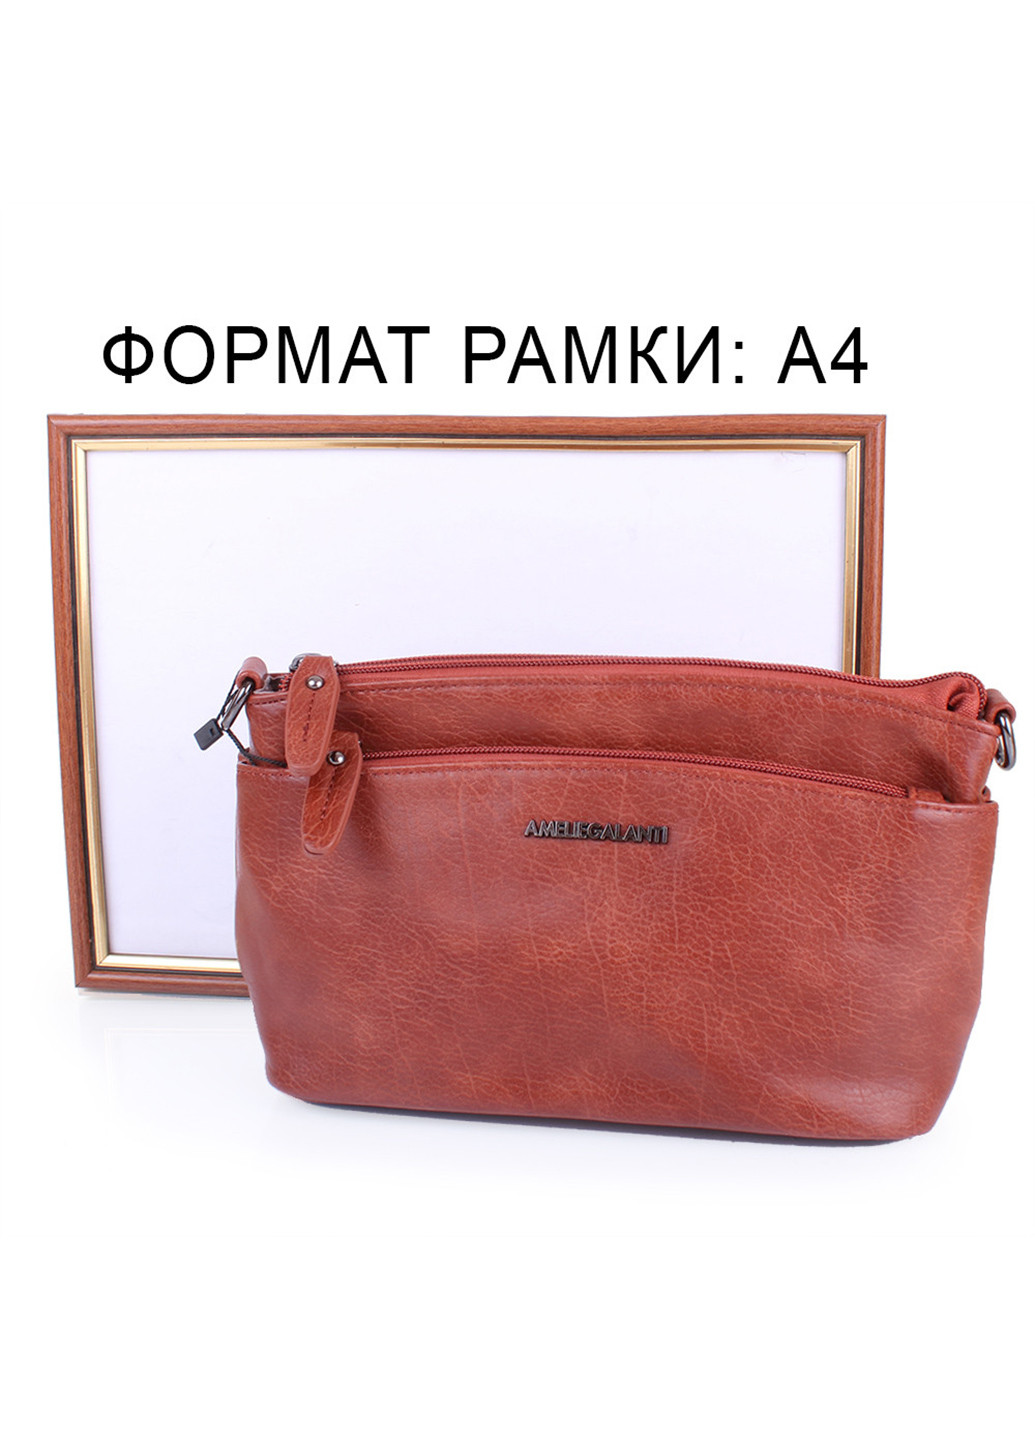 Женская мини-сумка 23х13х9 см Amelie Galanti (252132395)